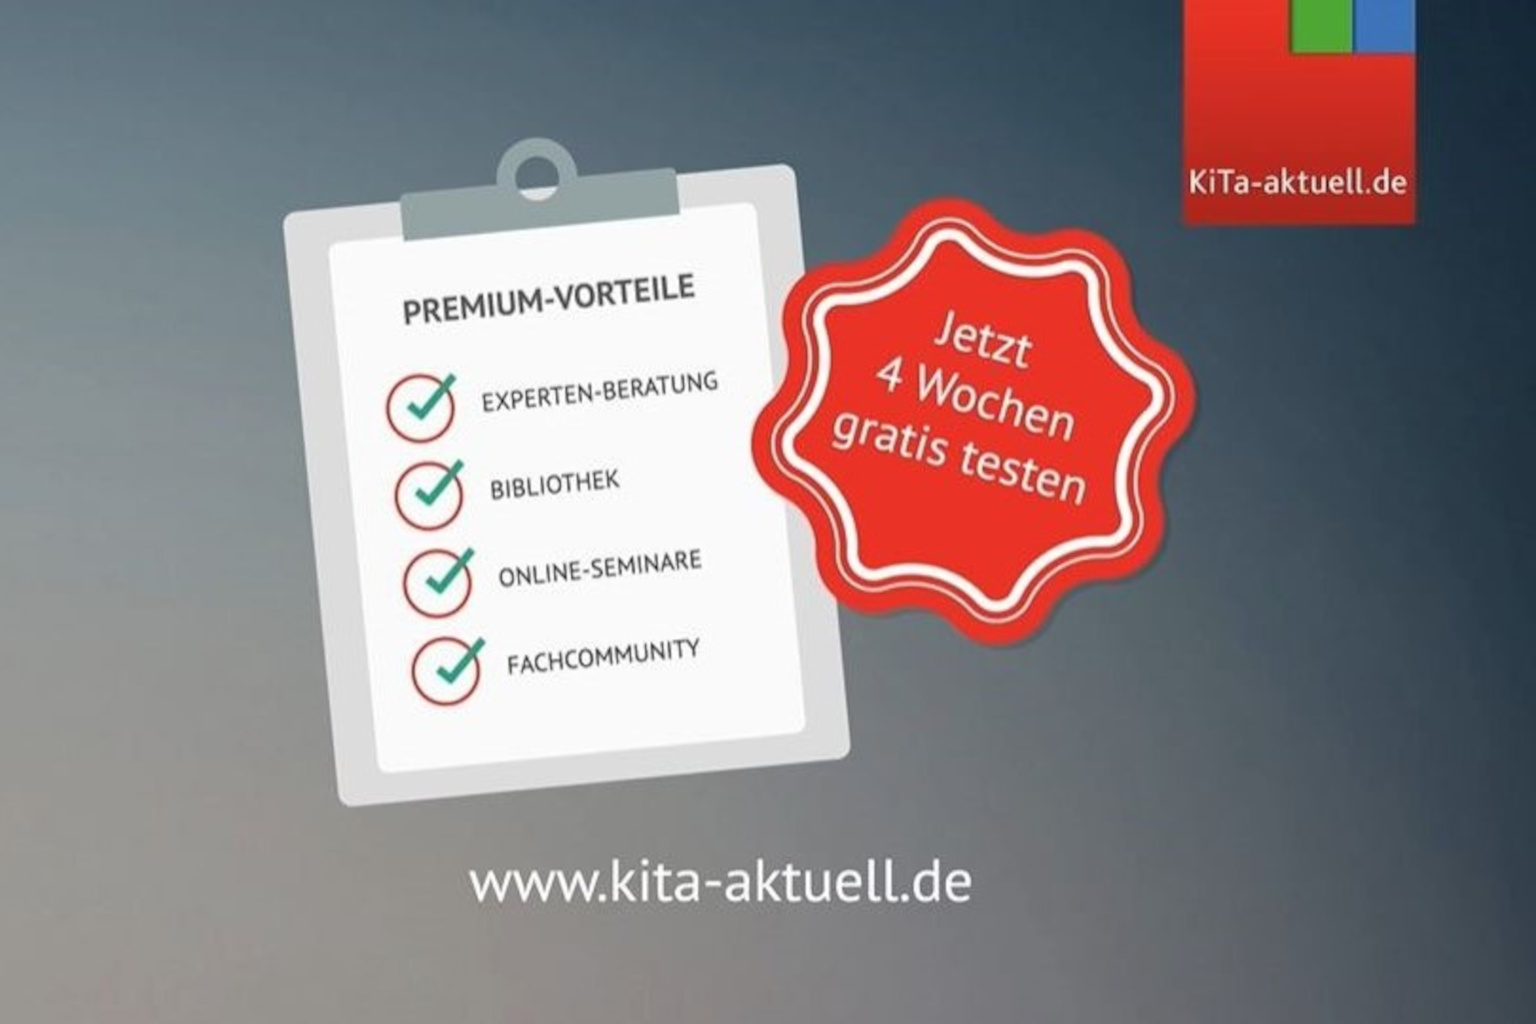 KiTa-aktuell.de schnell erklärt | Erklärvideo